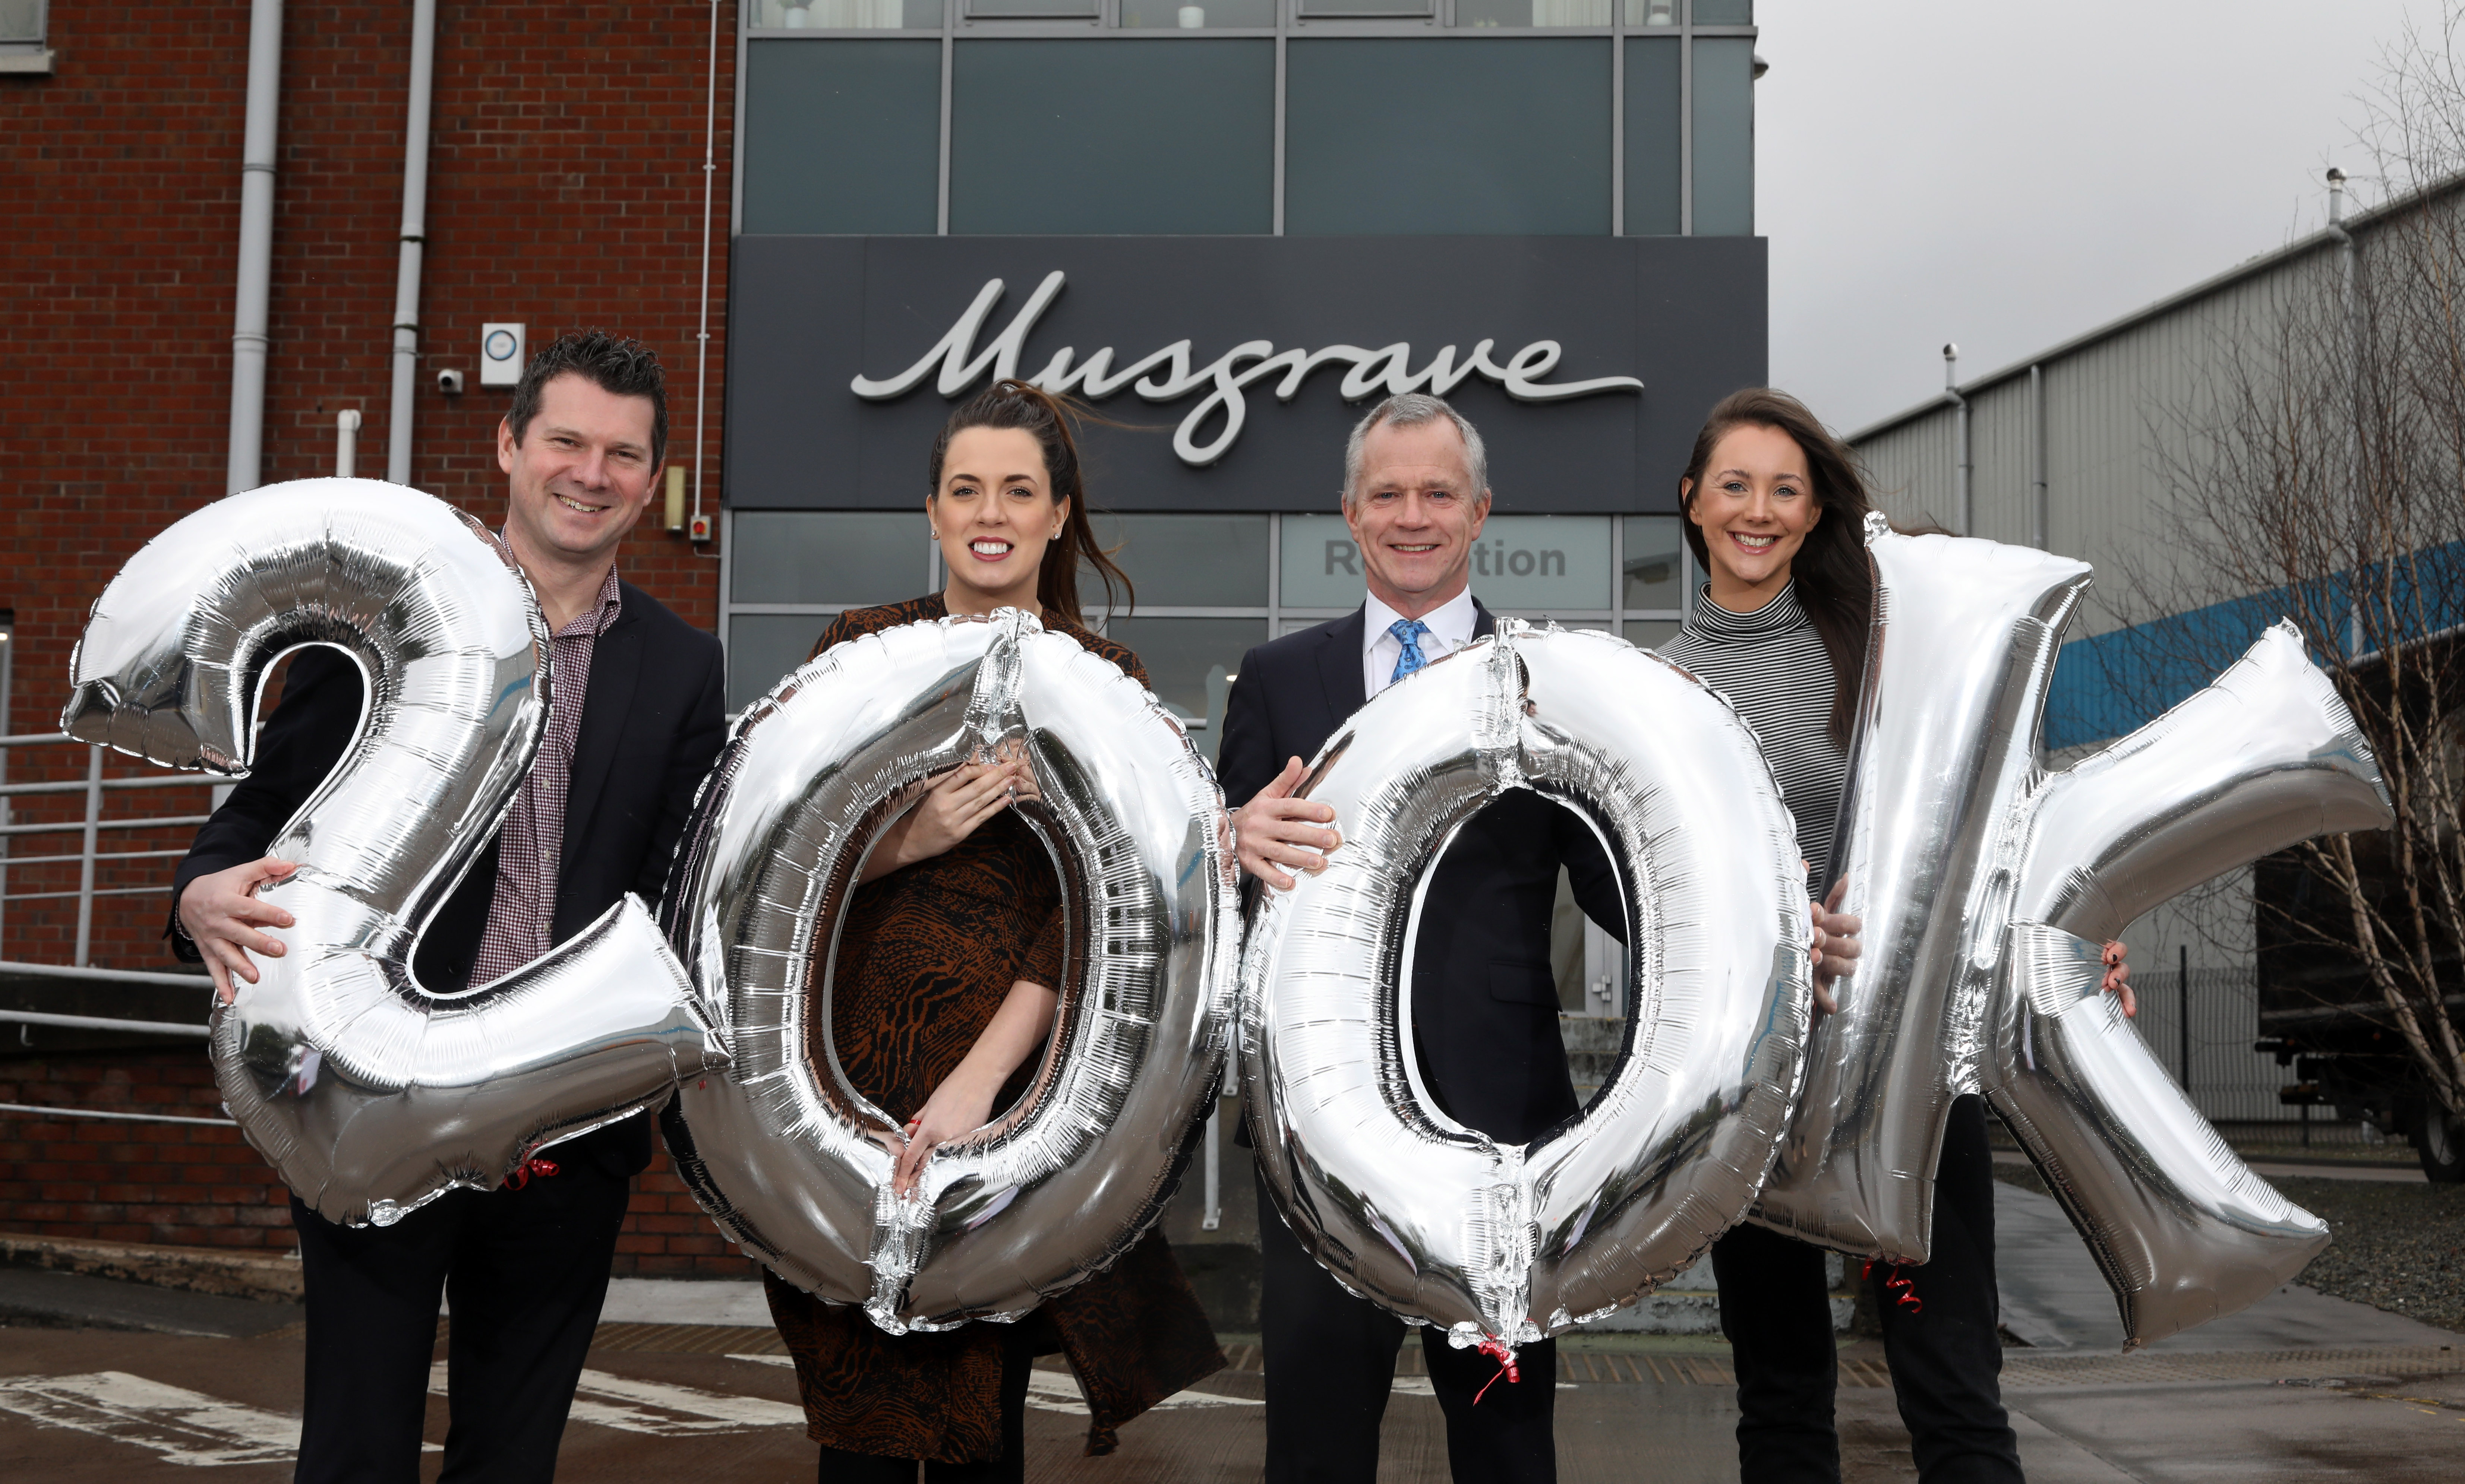 Musgrave NI raises incredible £200k through charity partnership